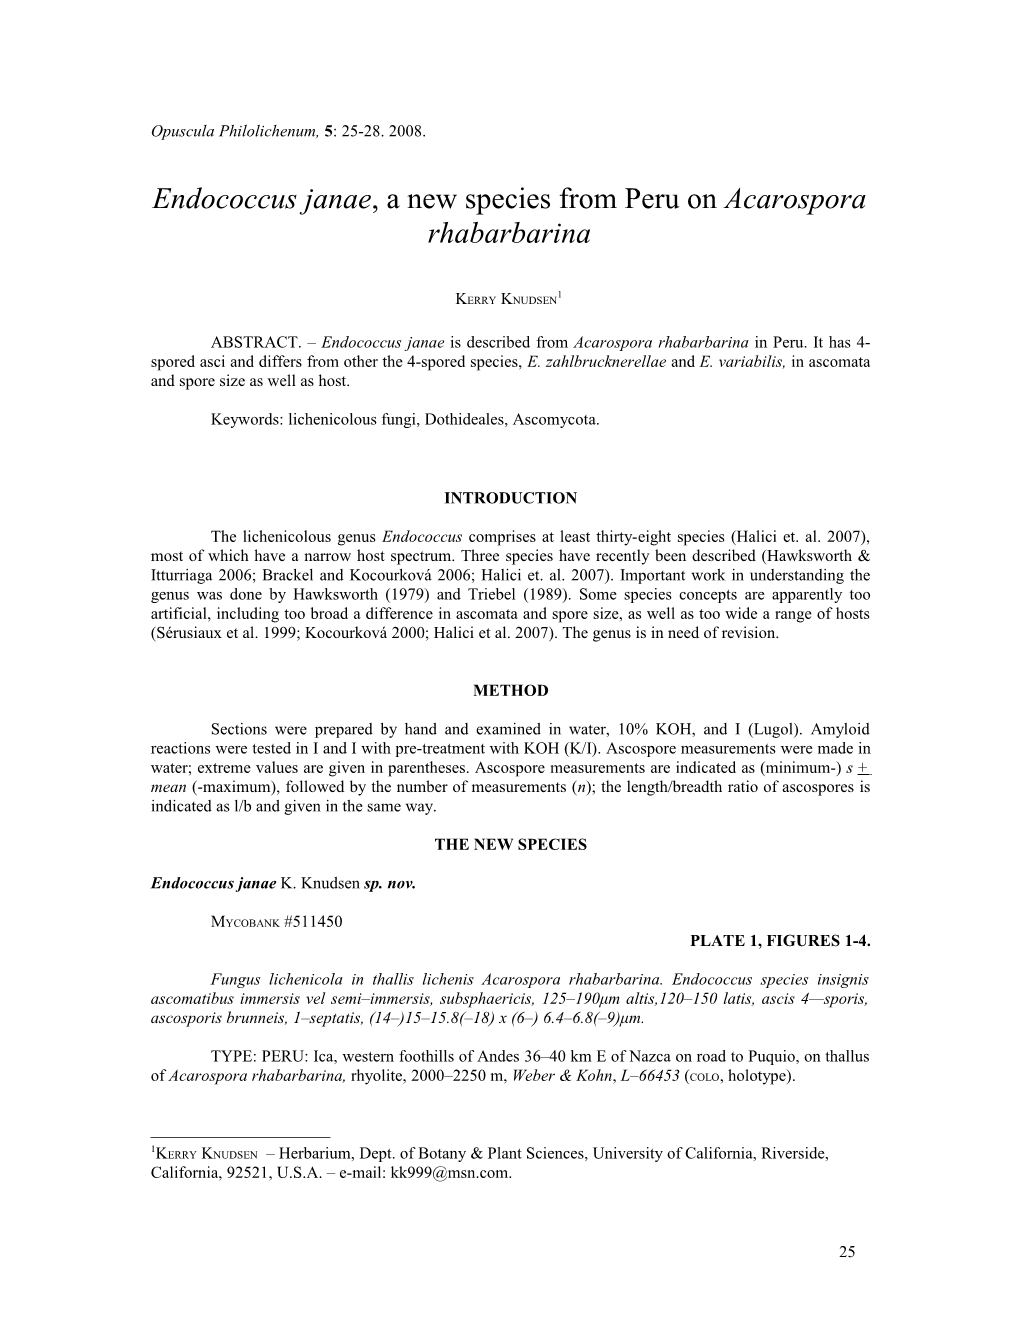 Endococcus Janae, a New Species from Peru on Acarospora Rhabarbarina